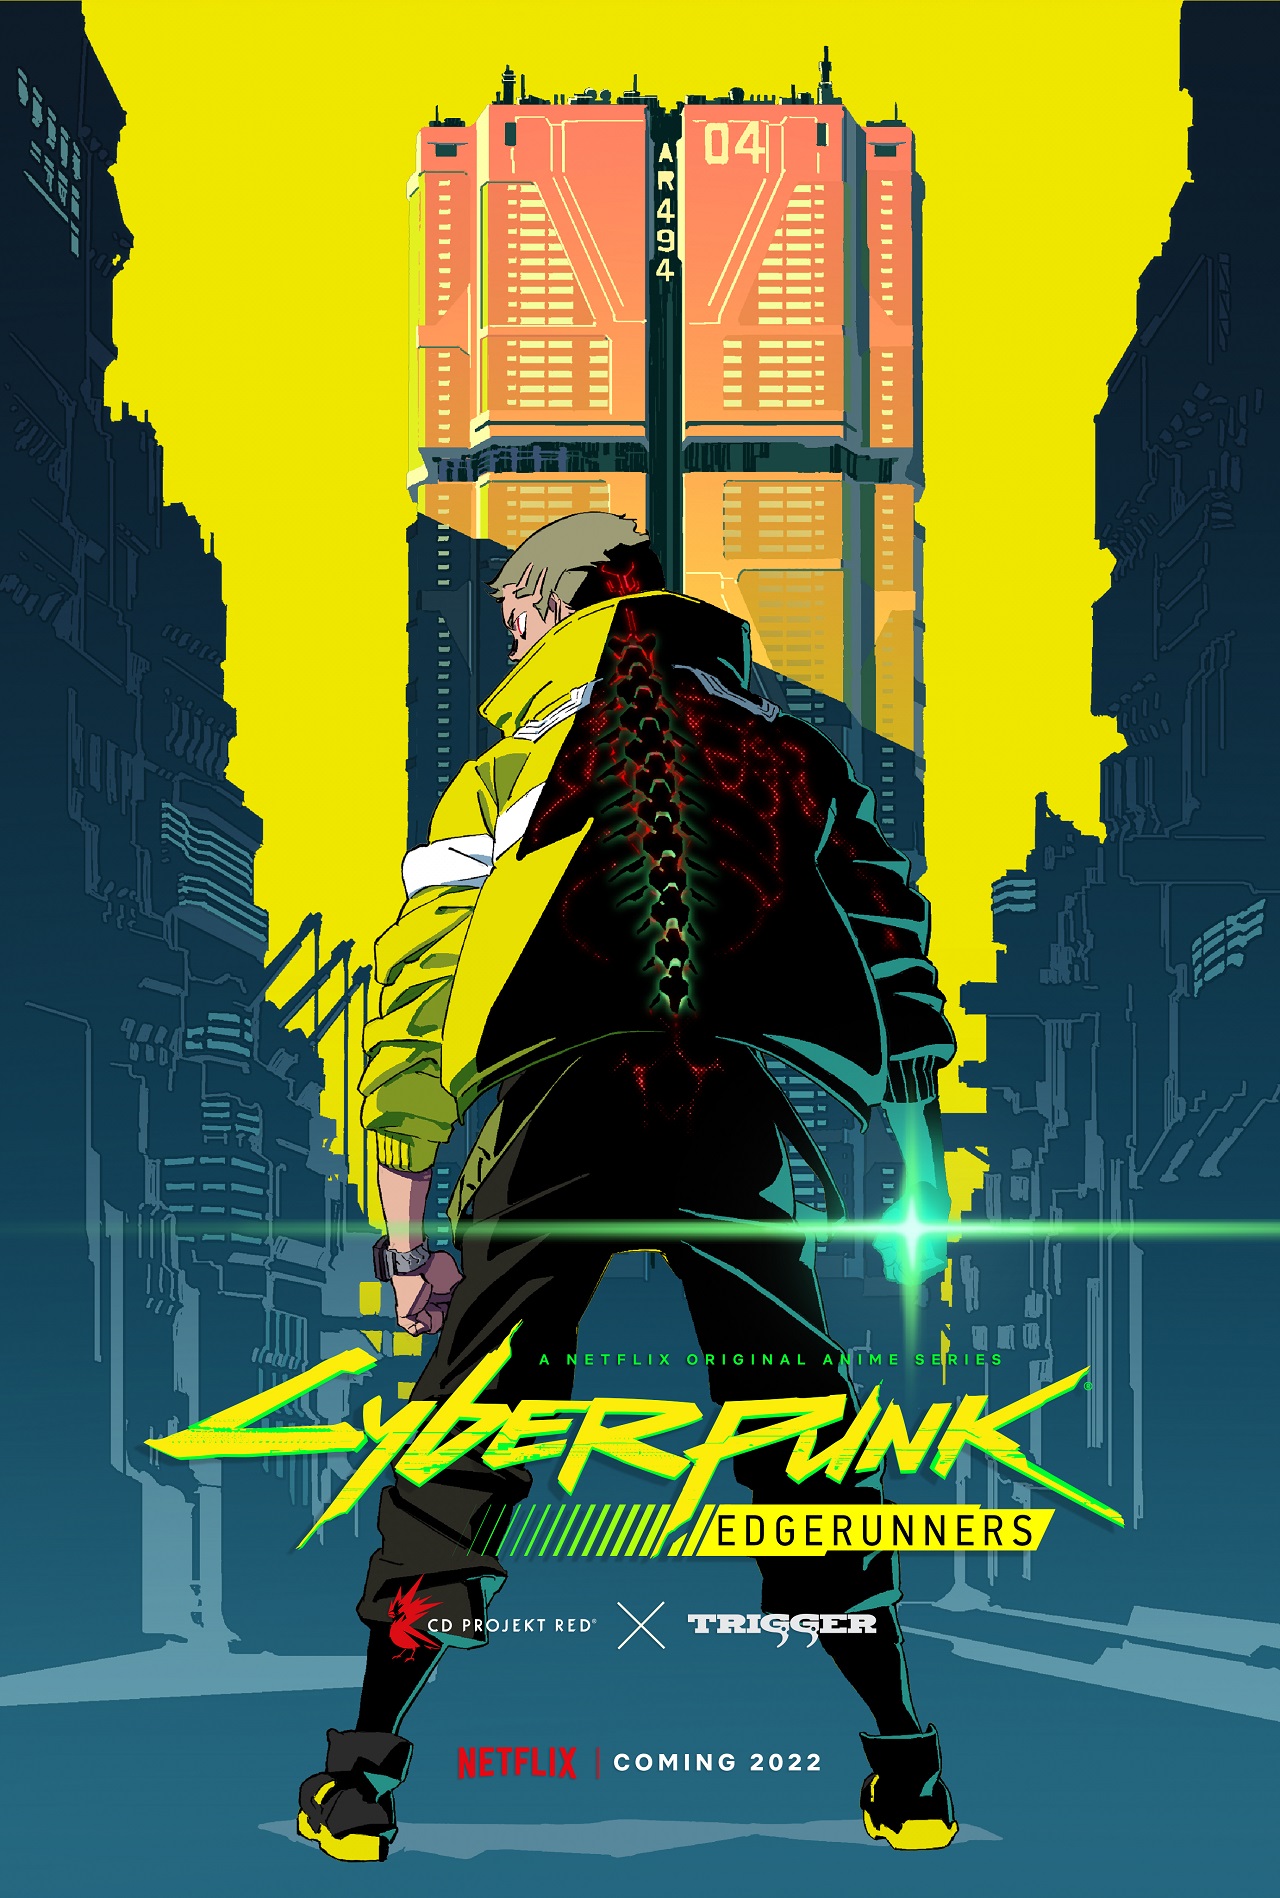 Cyberpunk Edgerunners Season 2  Release Date  What To Expect  GINX  Esports TV